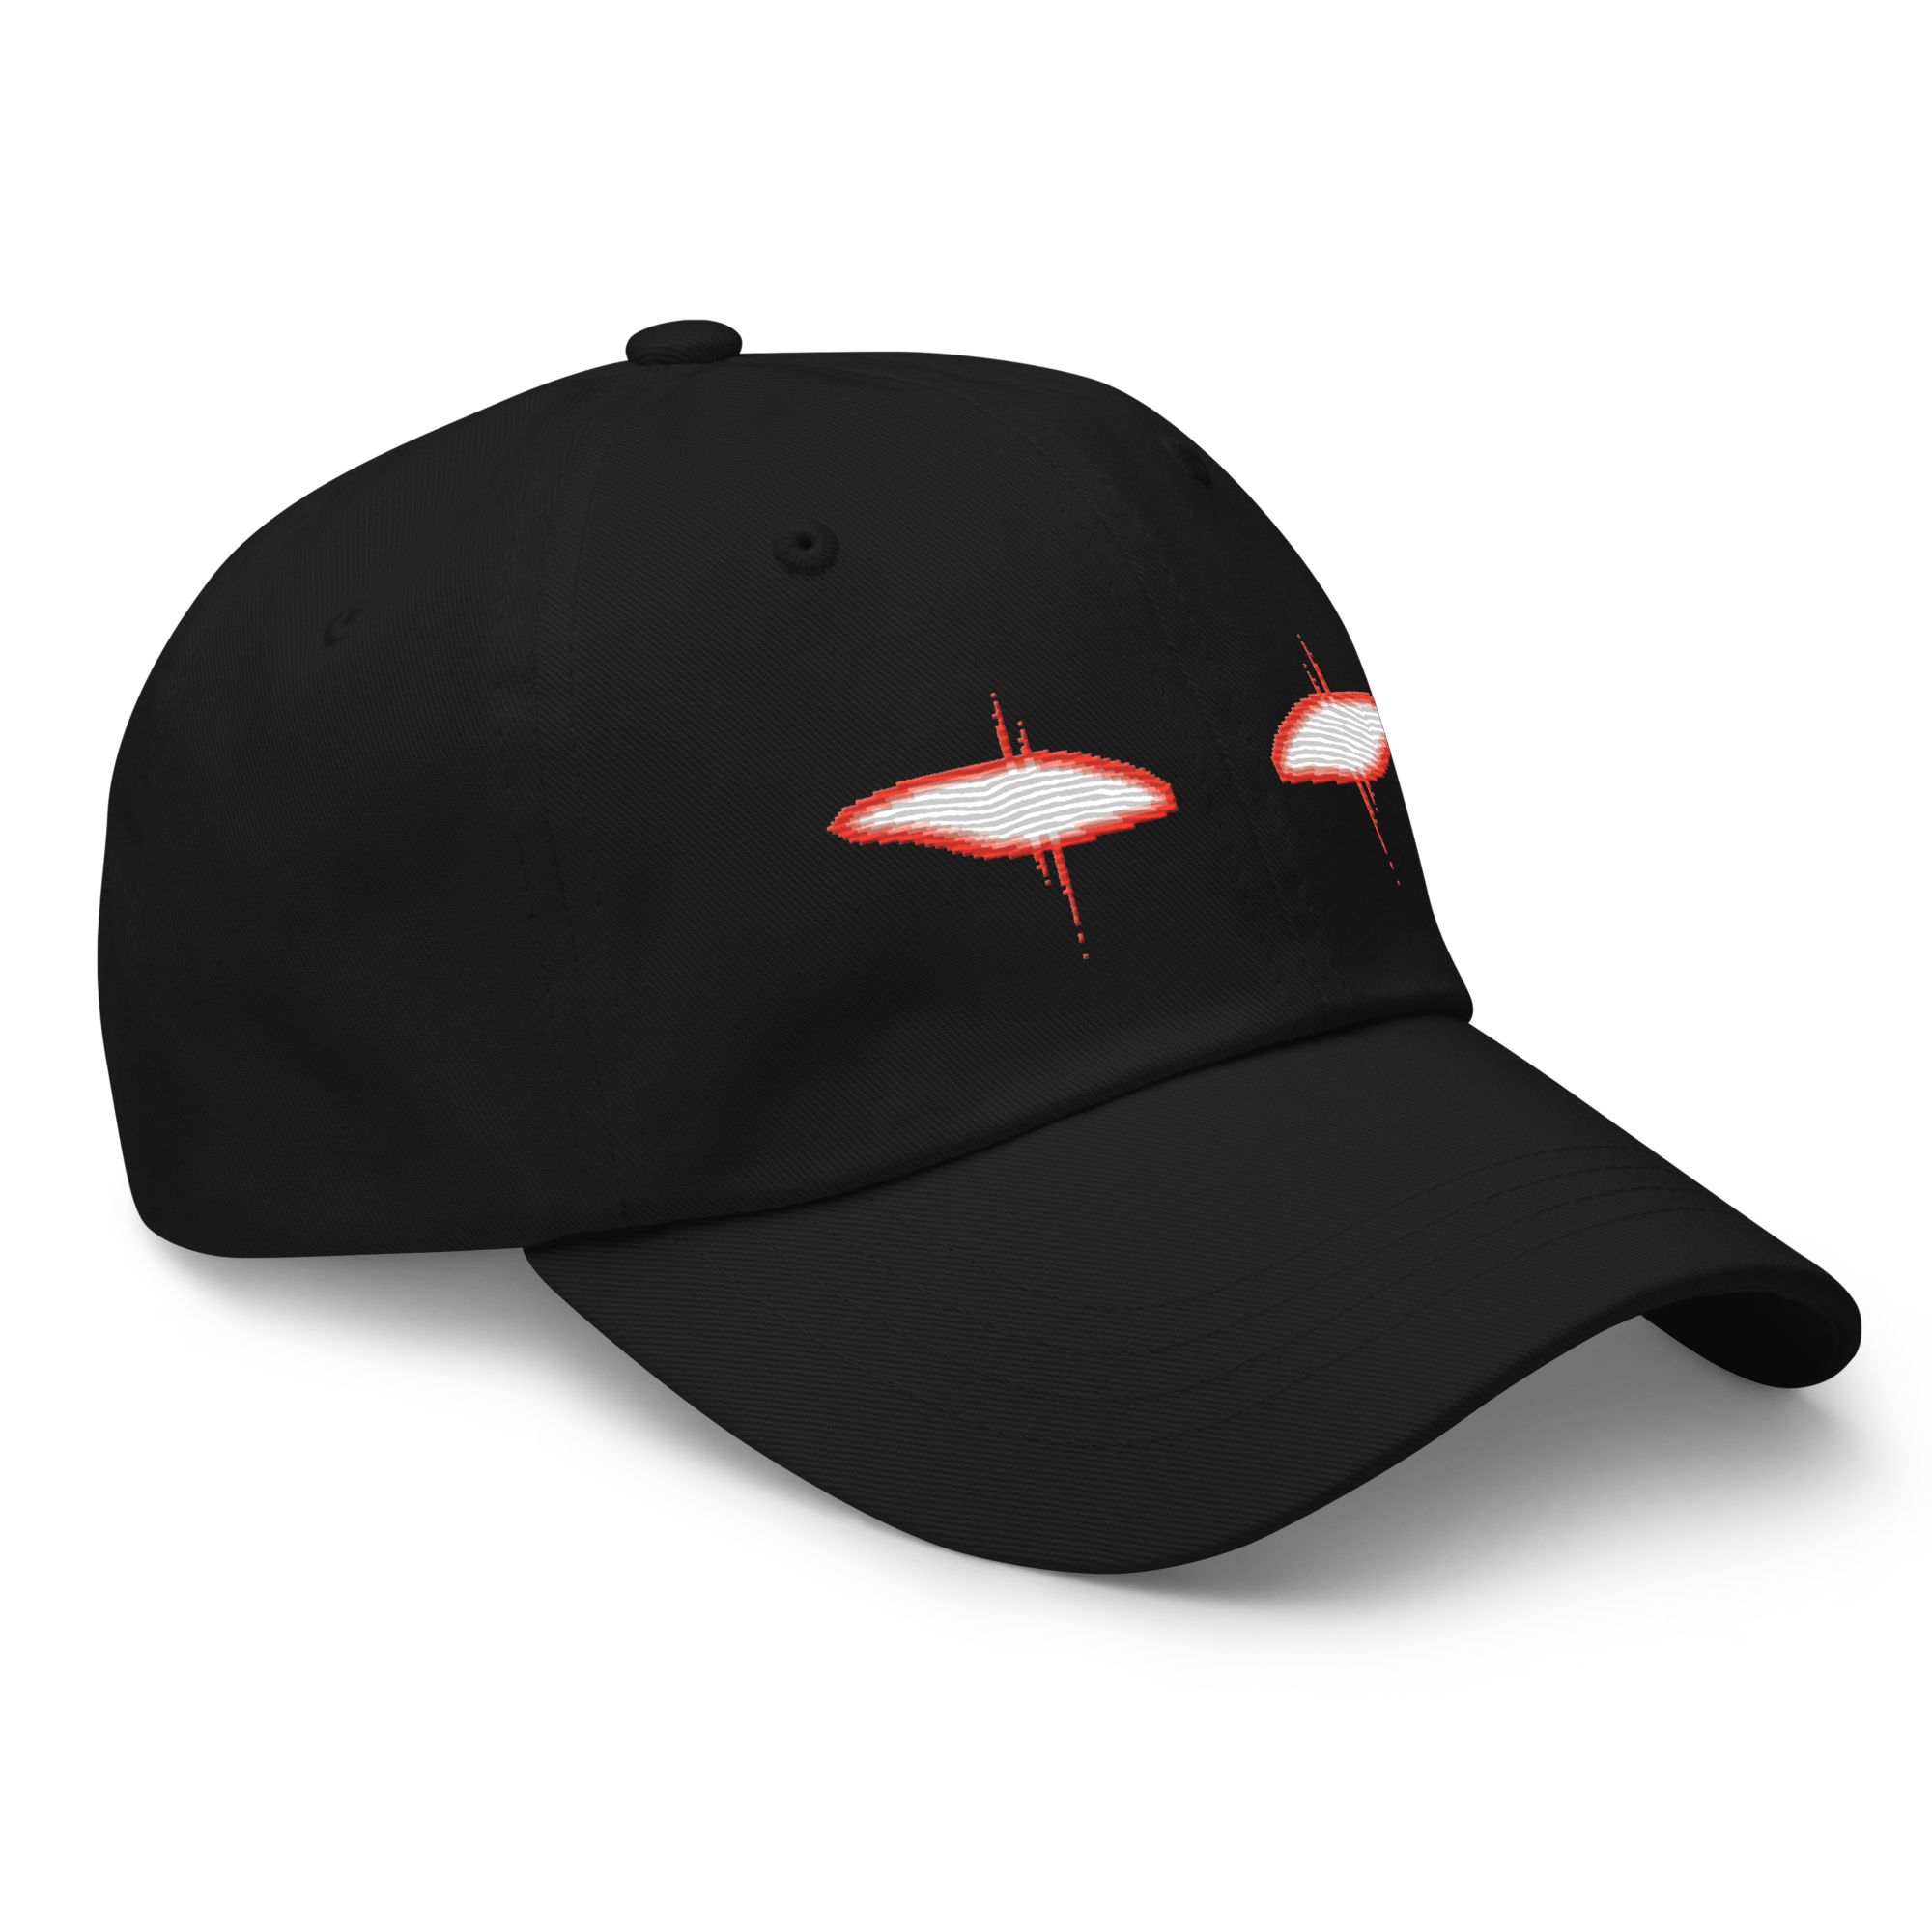 The Watcher Hat